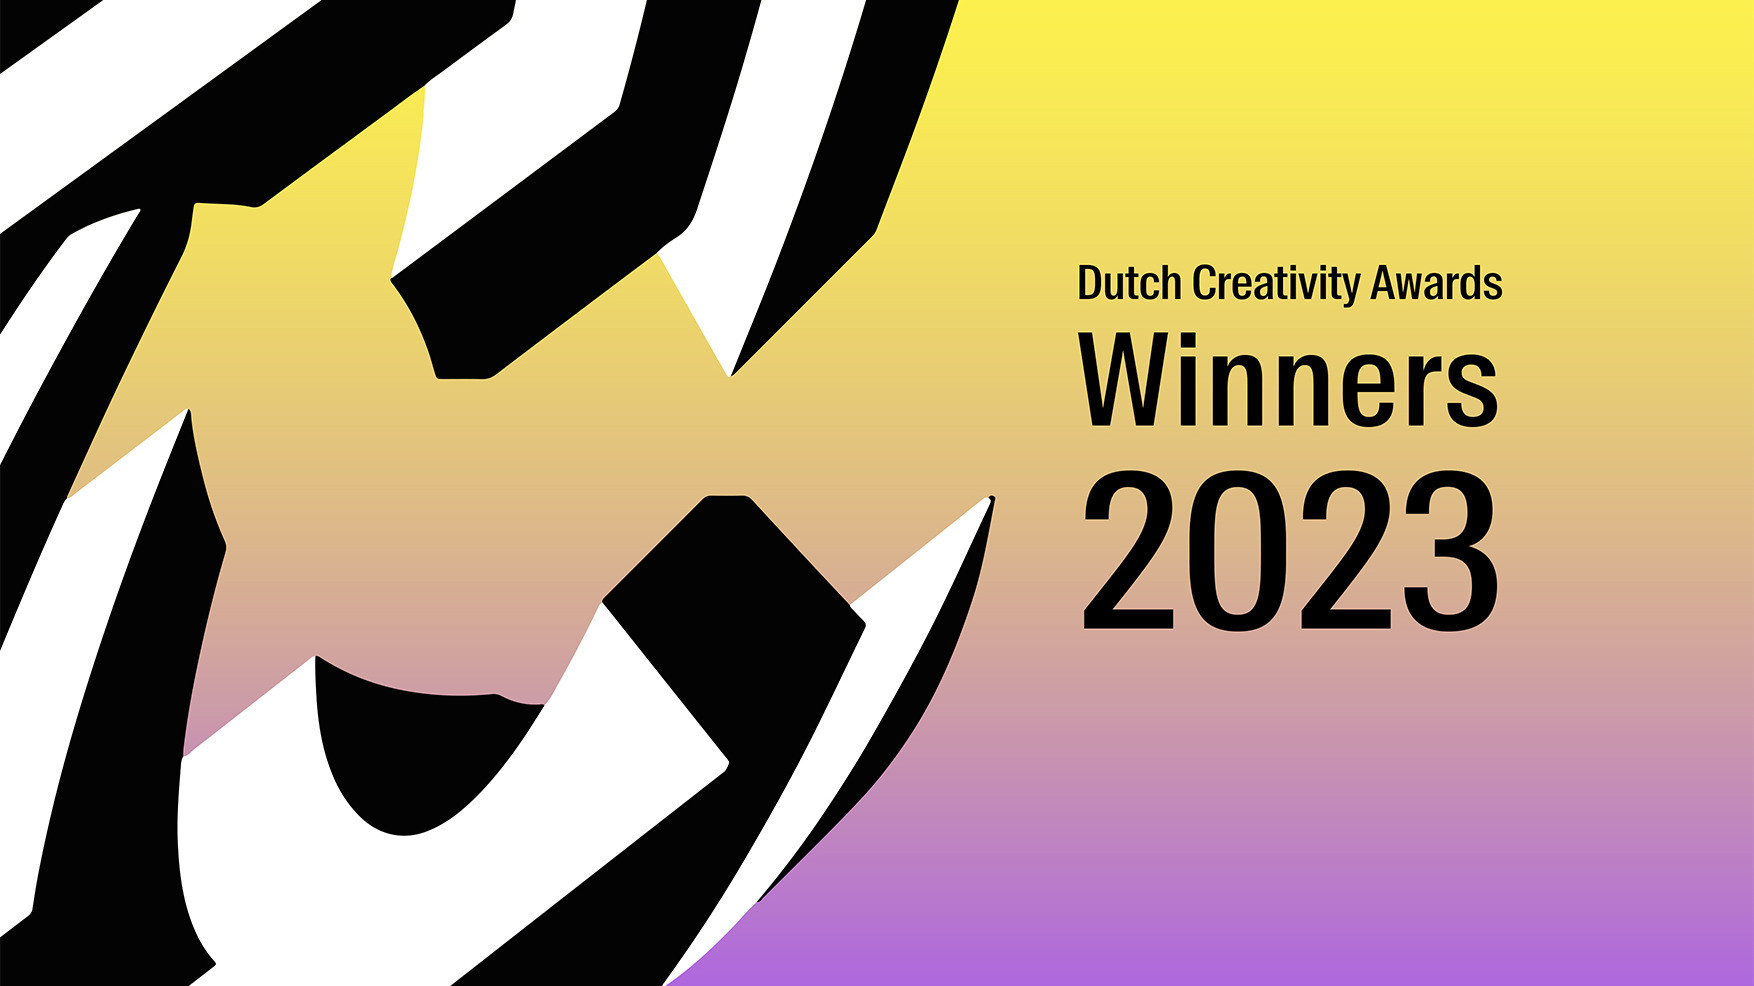 SYNC winner of a Golden lamp at the Dutch Creativity Awards